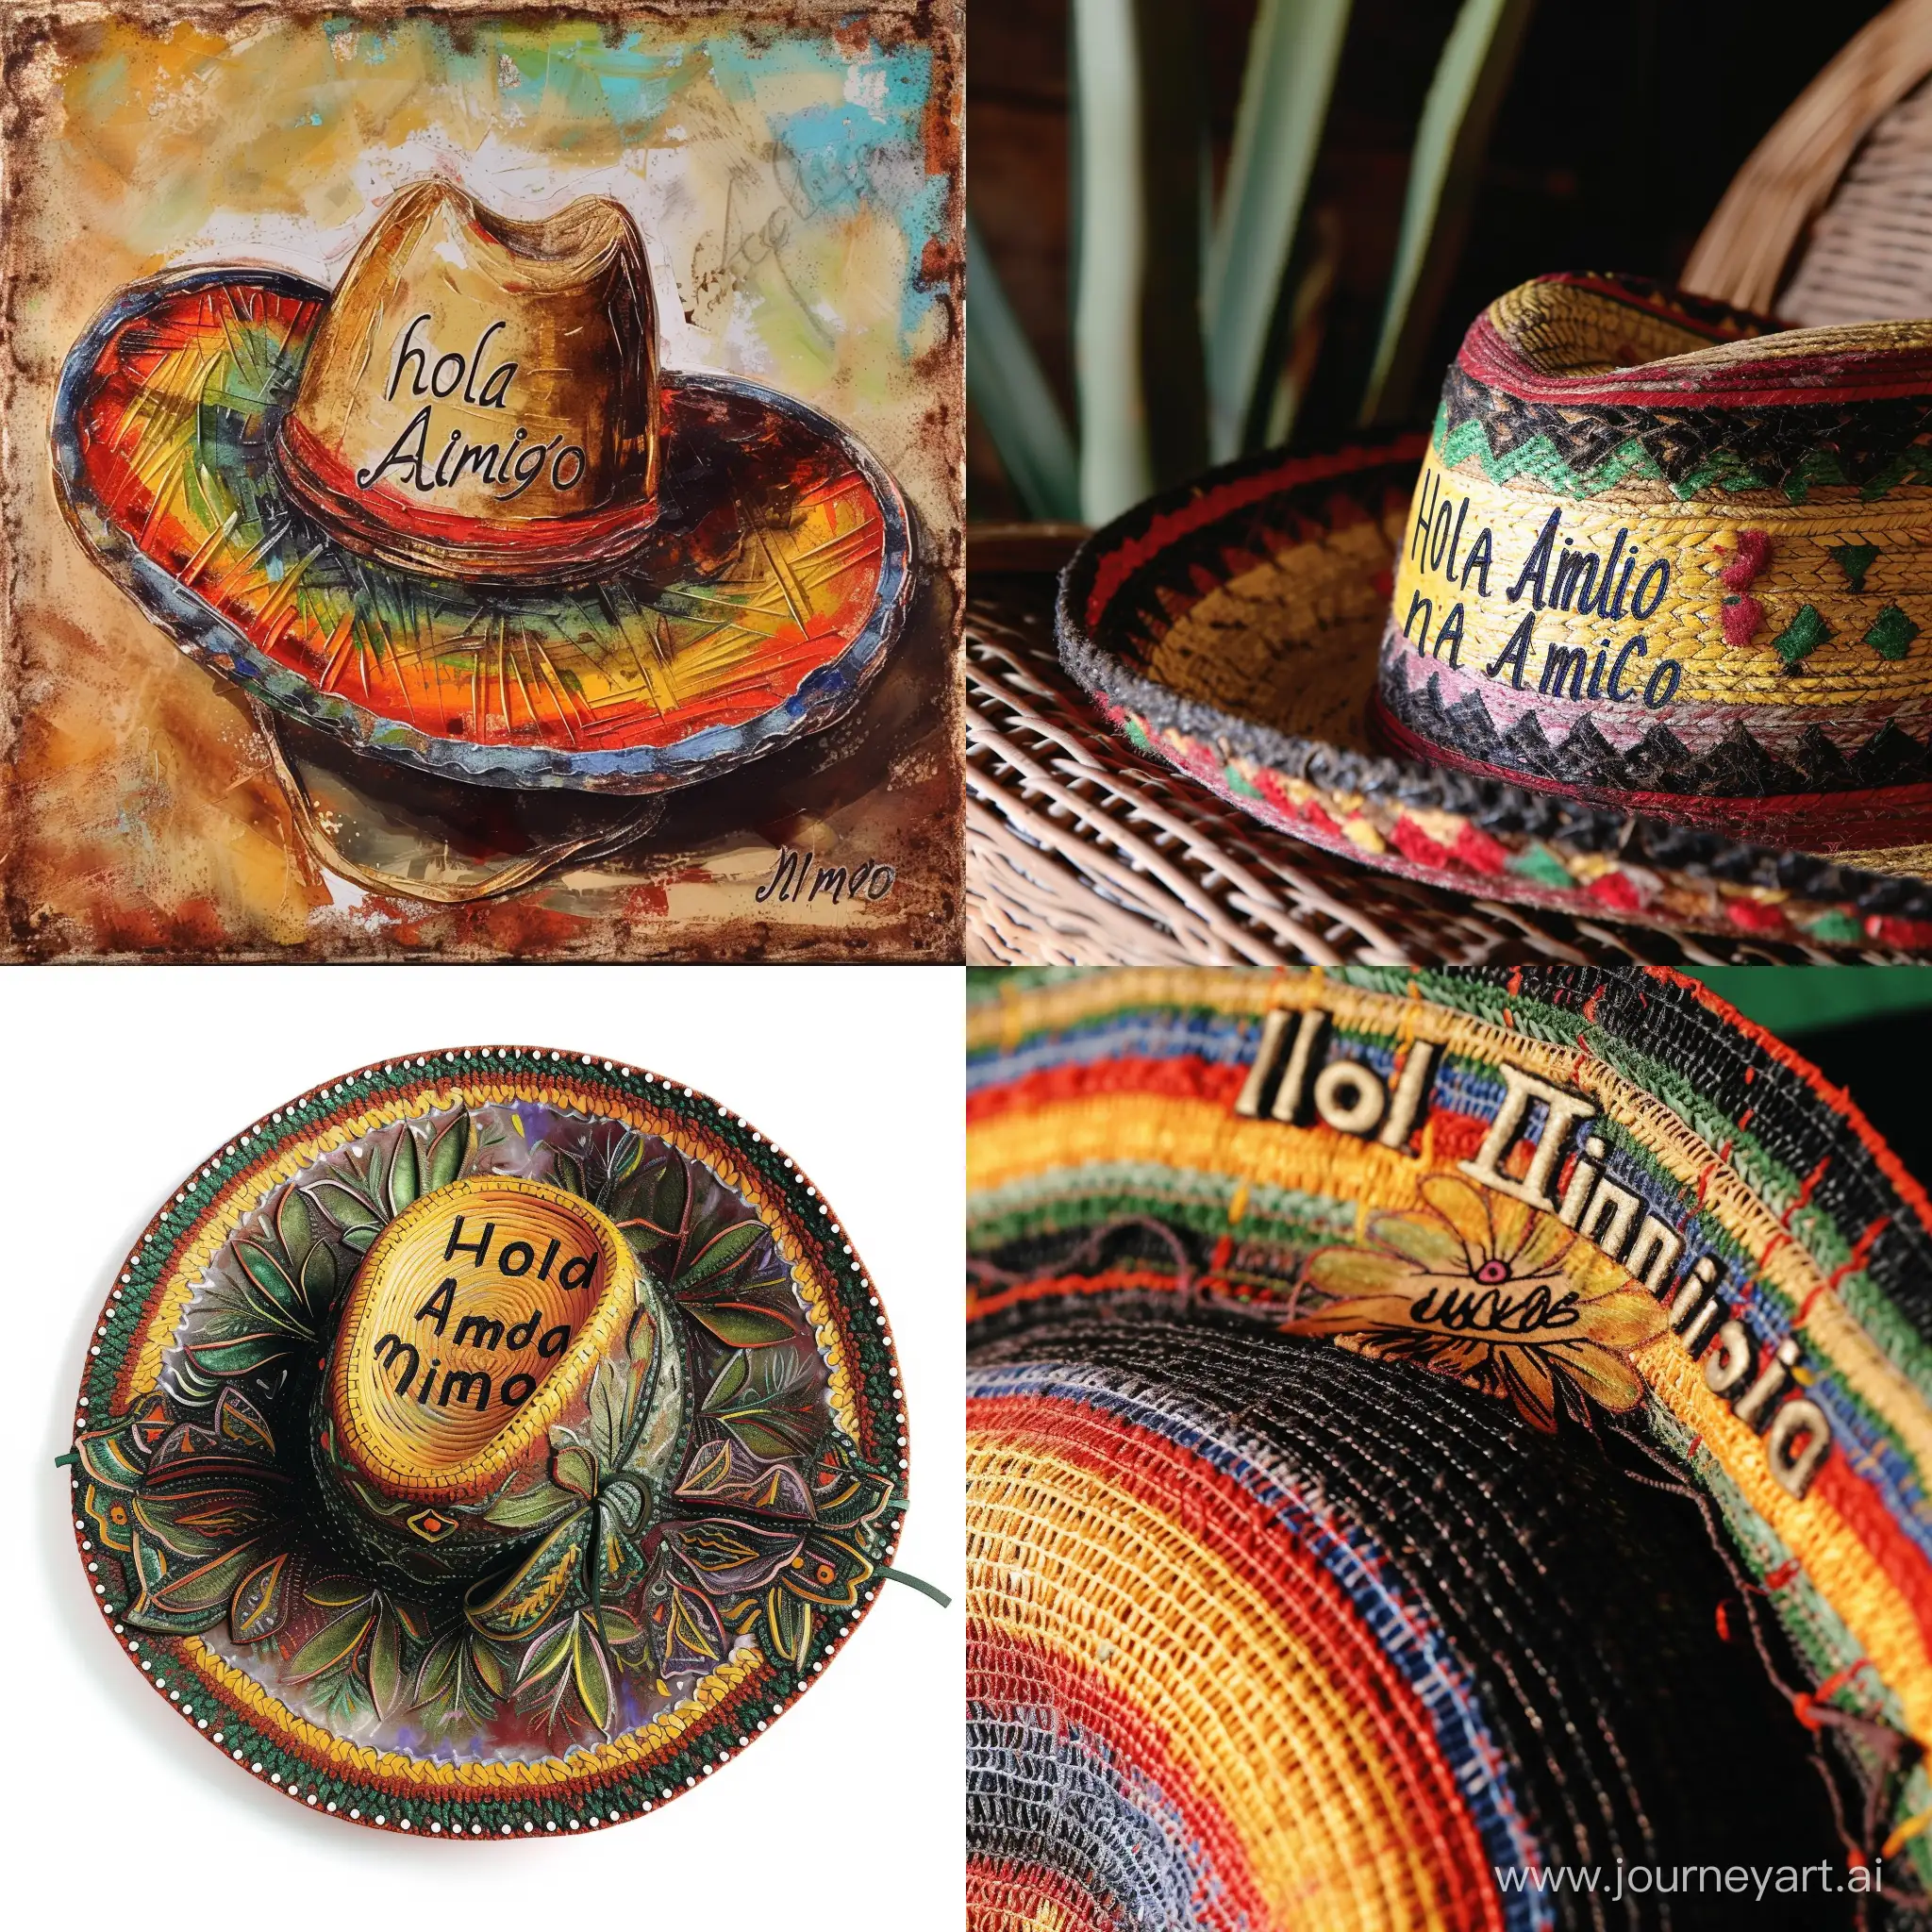 Colorful-Mexican-Sombrero-with-Hola-Amigo-Inscription